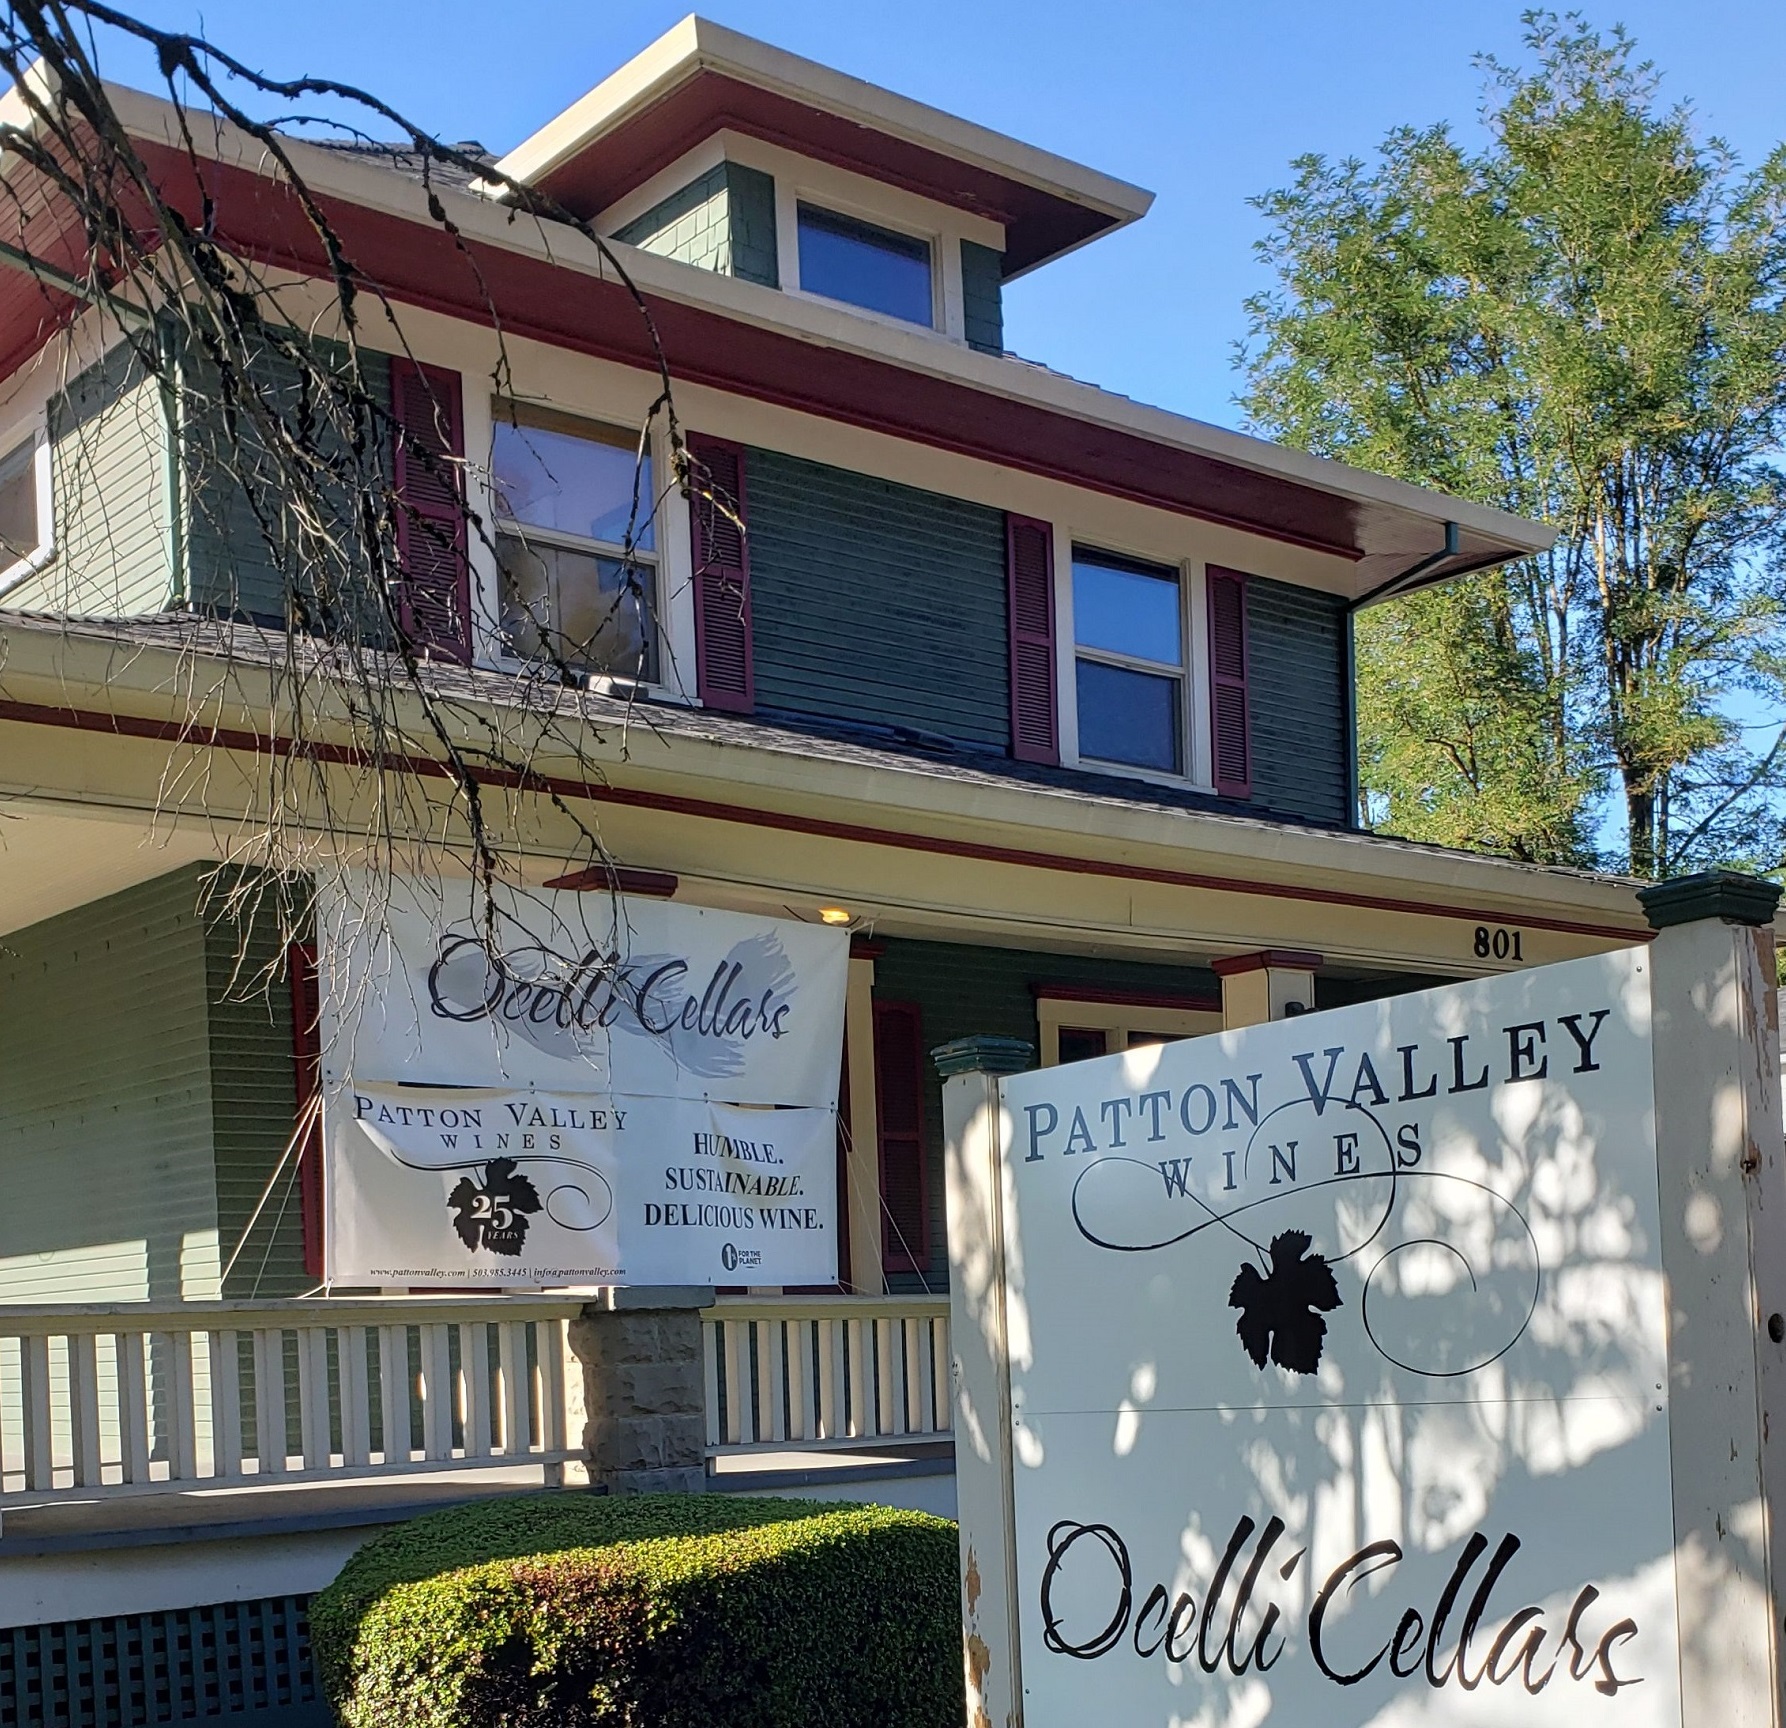 Patton Valley Wines + Ocelli Cellars